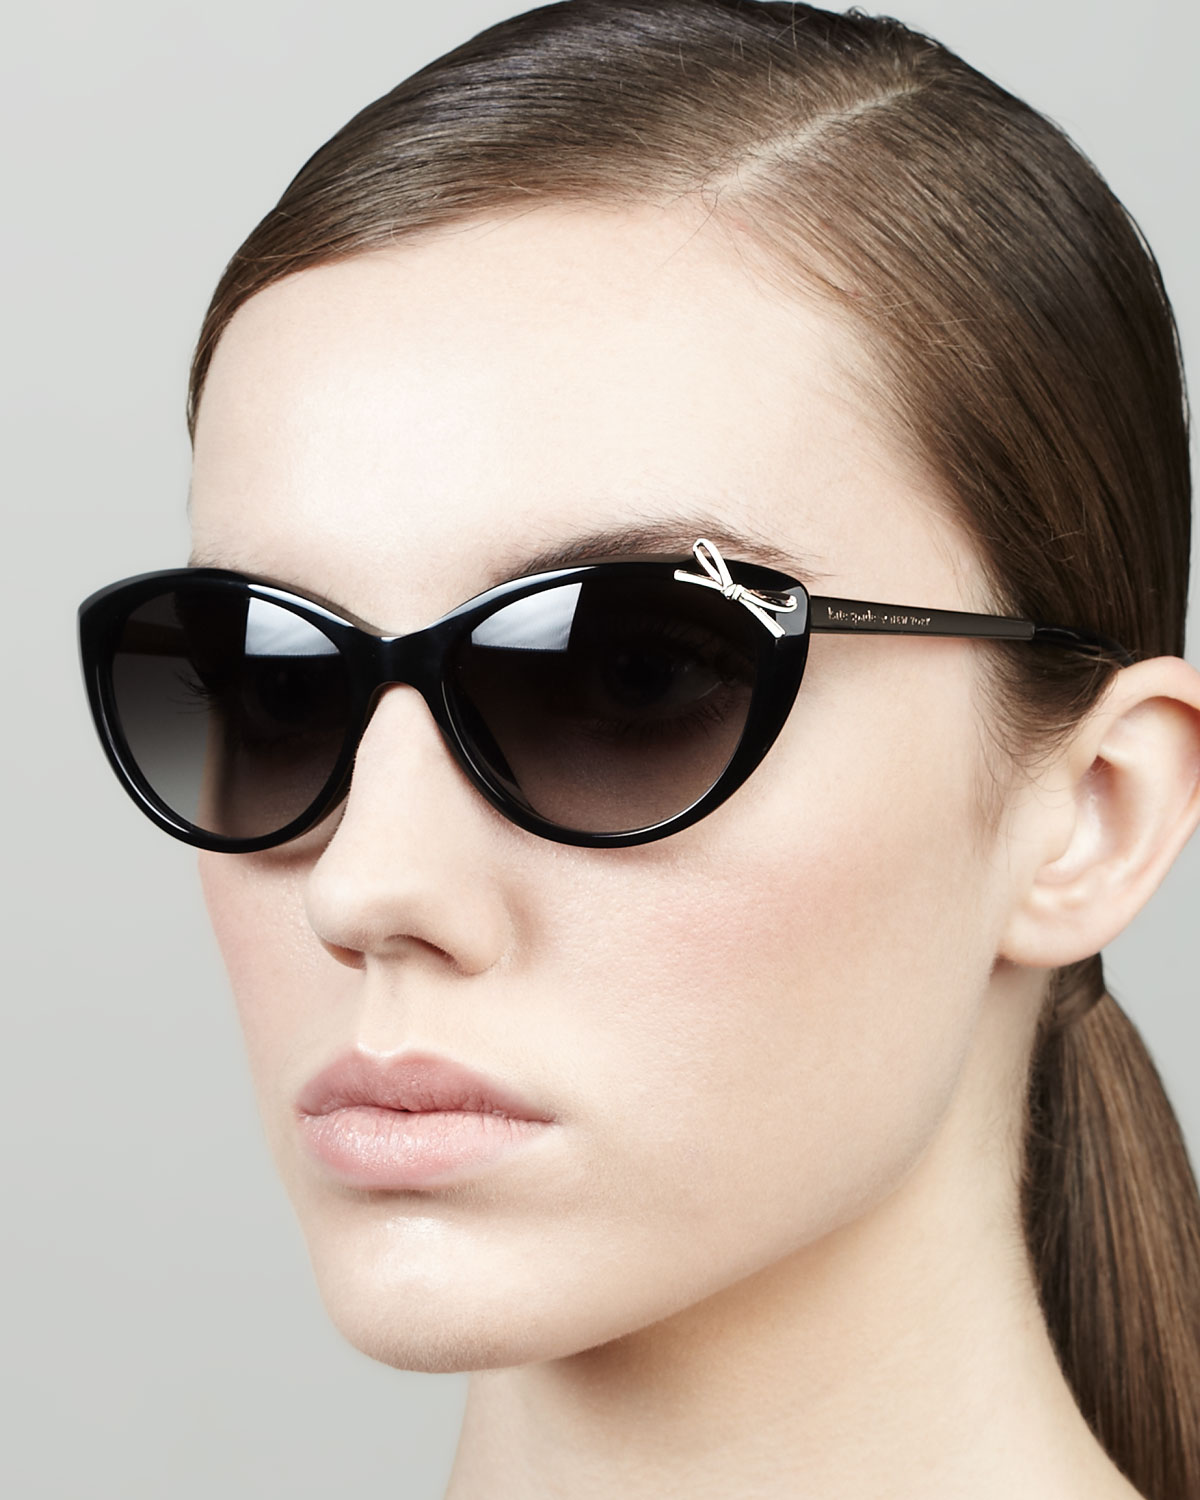 Lyst - Kate Spade New York Livia Bow Cat-eye Sunglasses in Black